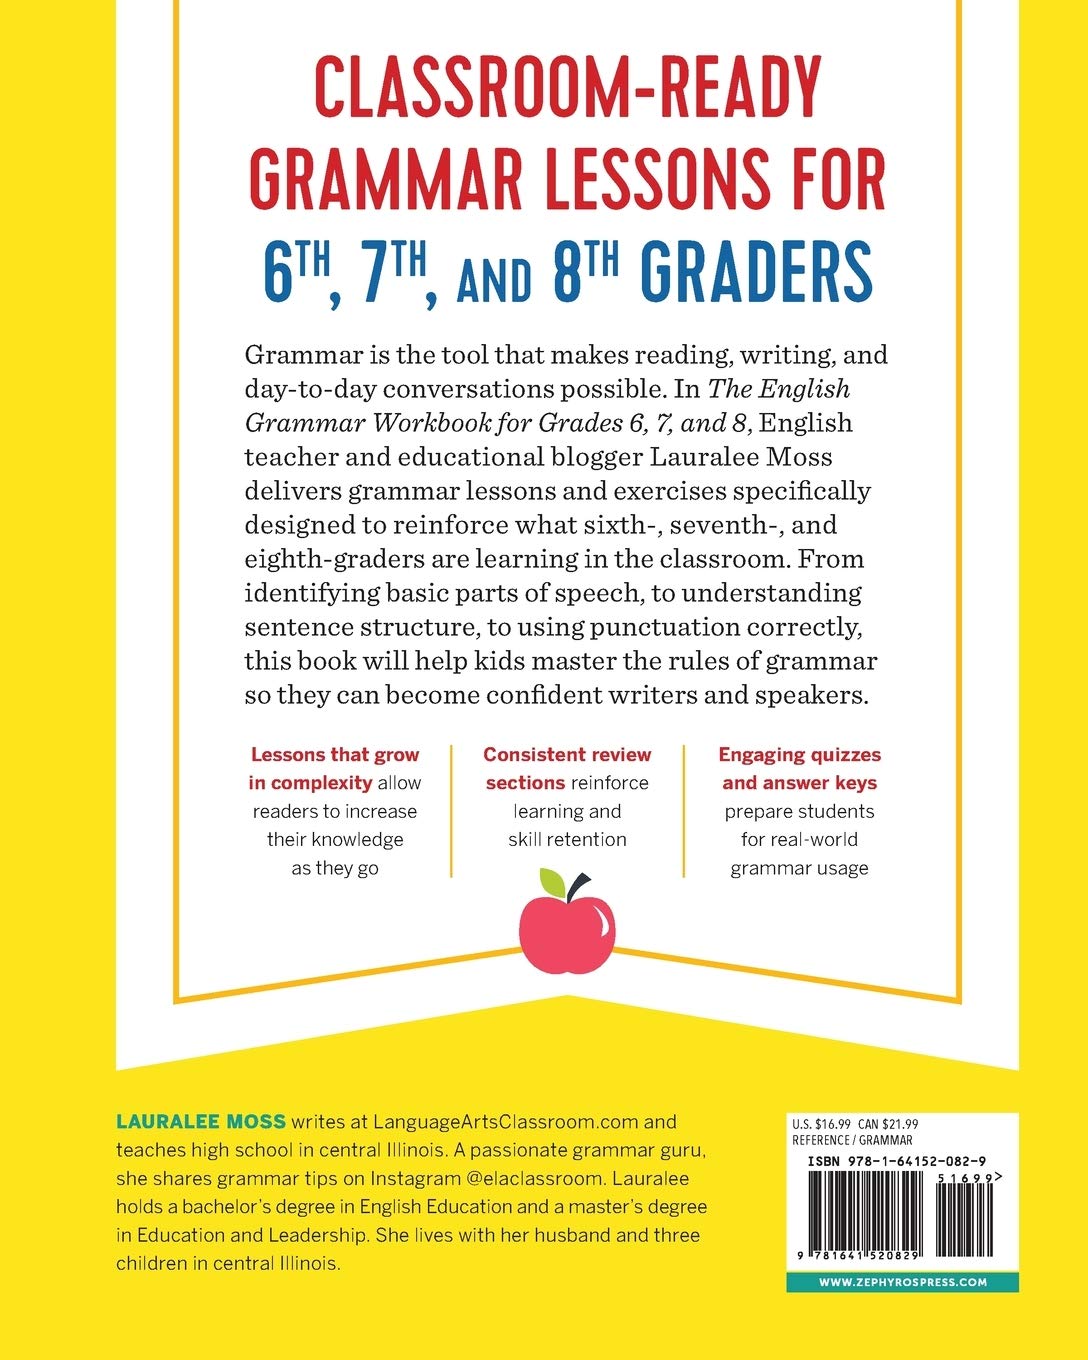 Seven Strategies for Grammar Instruction (Opinion)